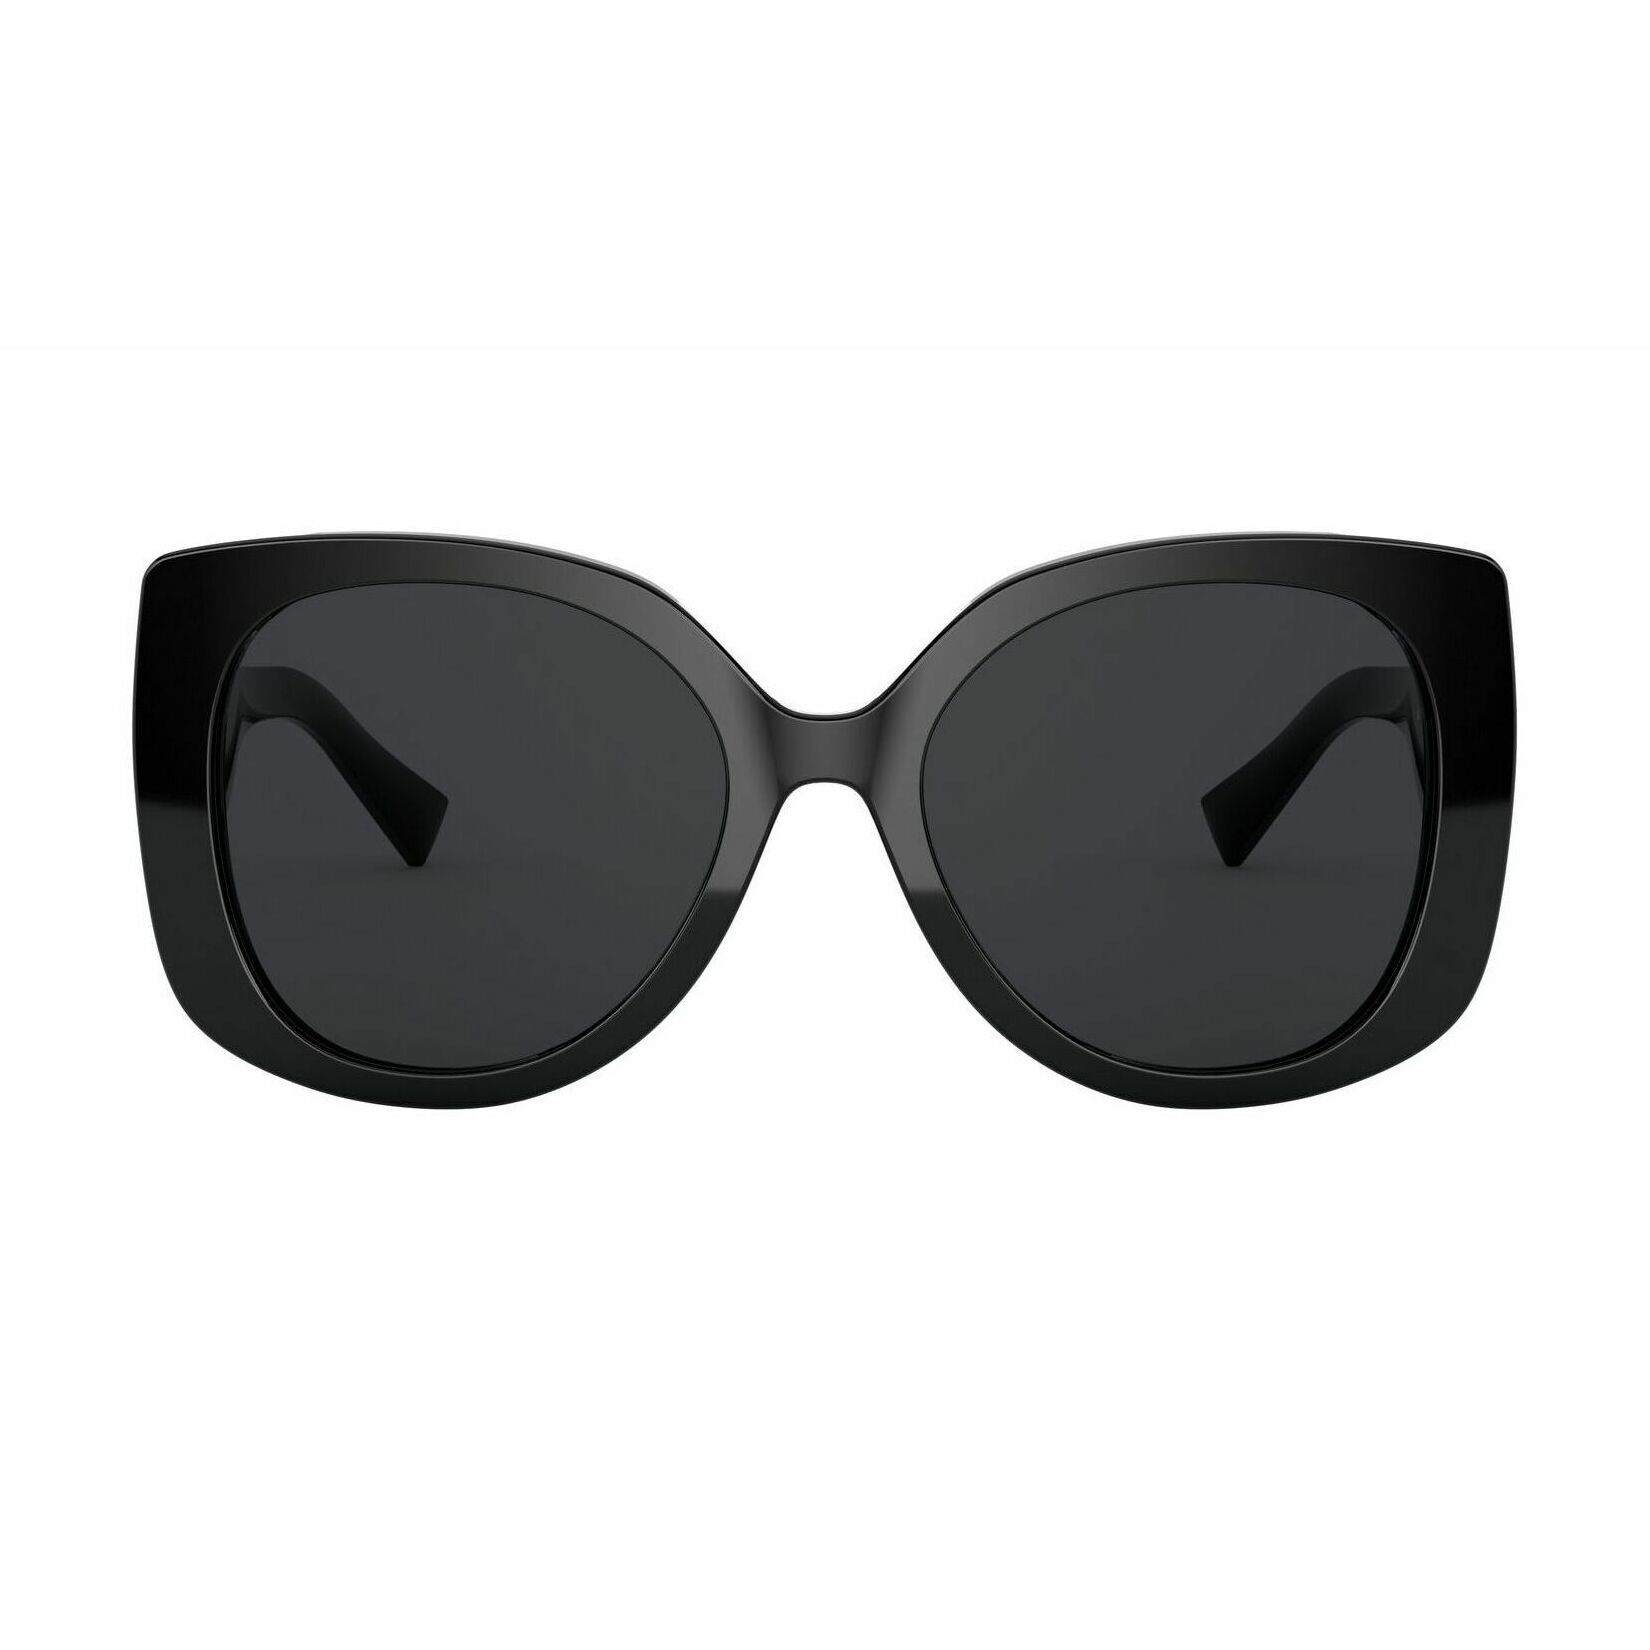 VE4387 Square Sunglasses GB1 87 - size 56